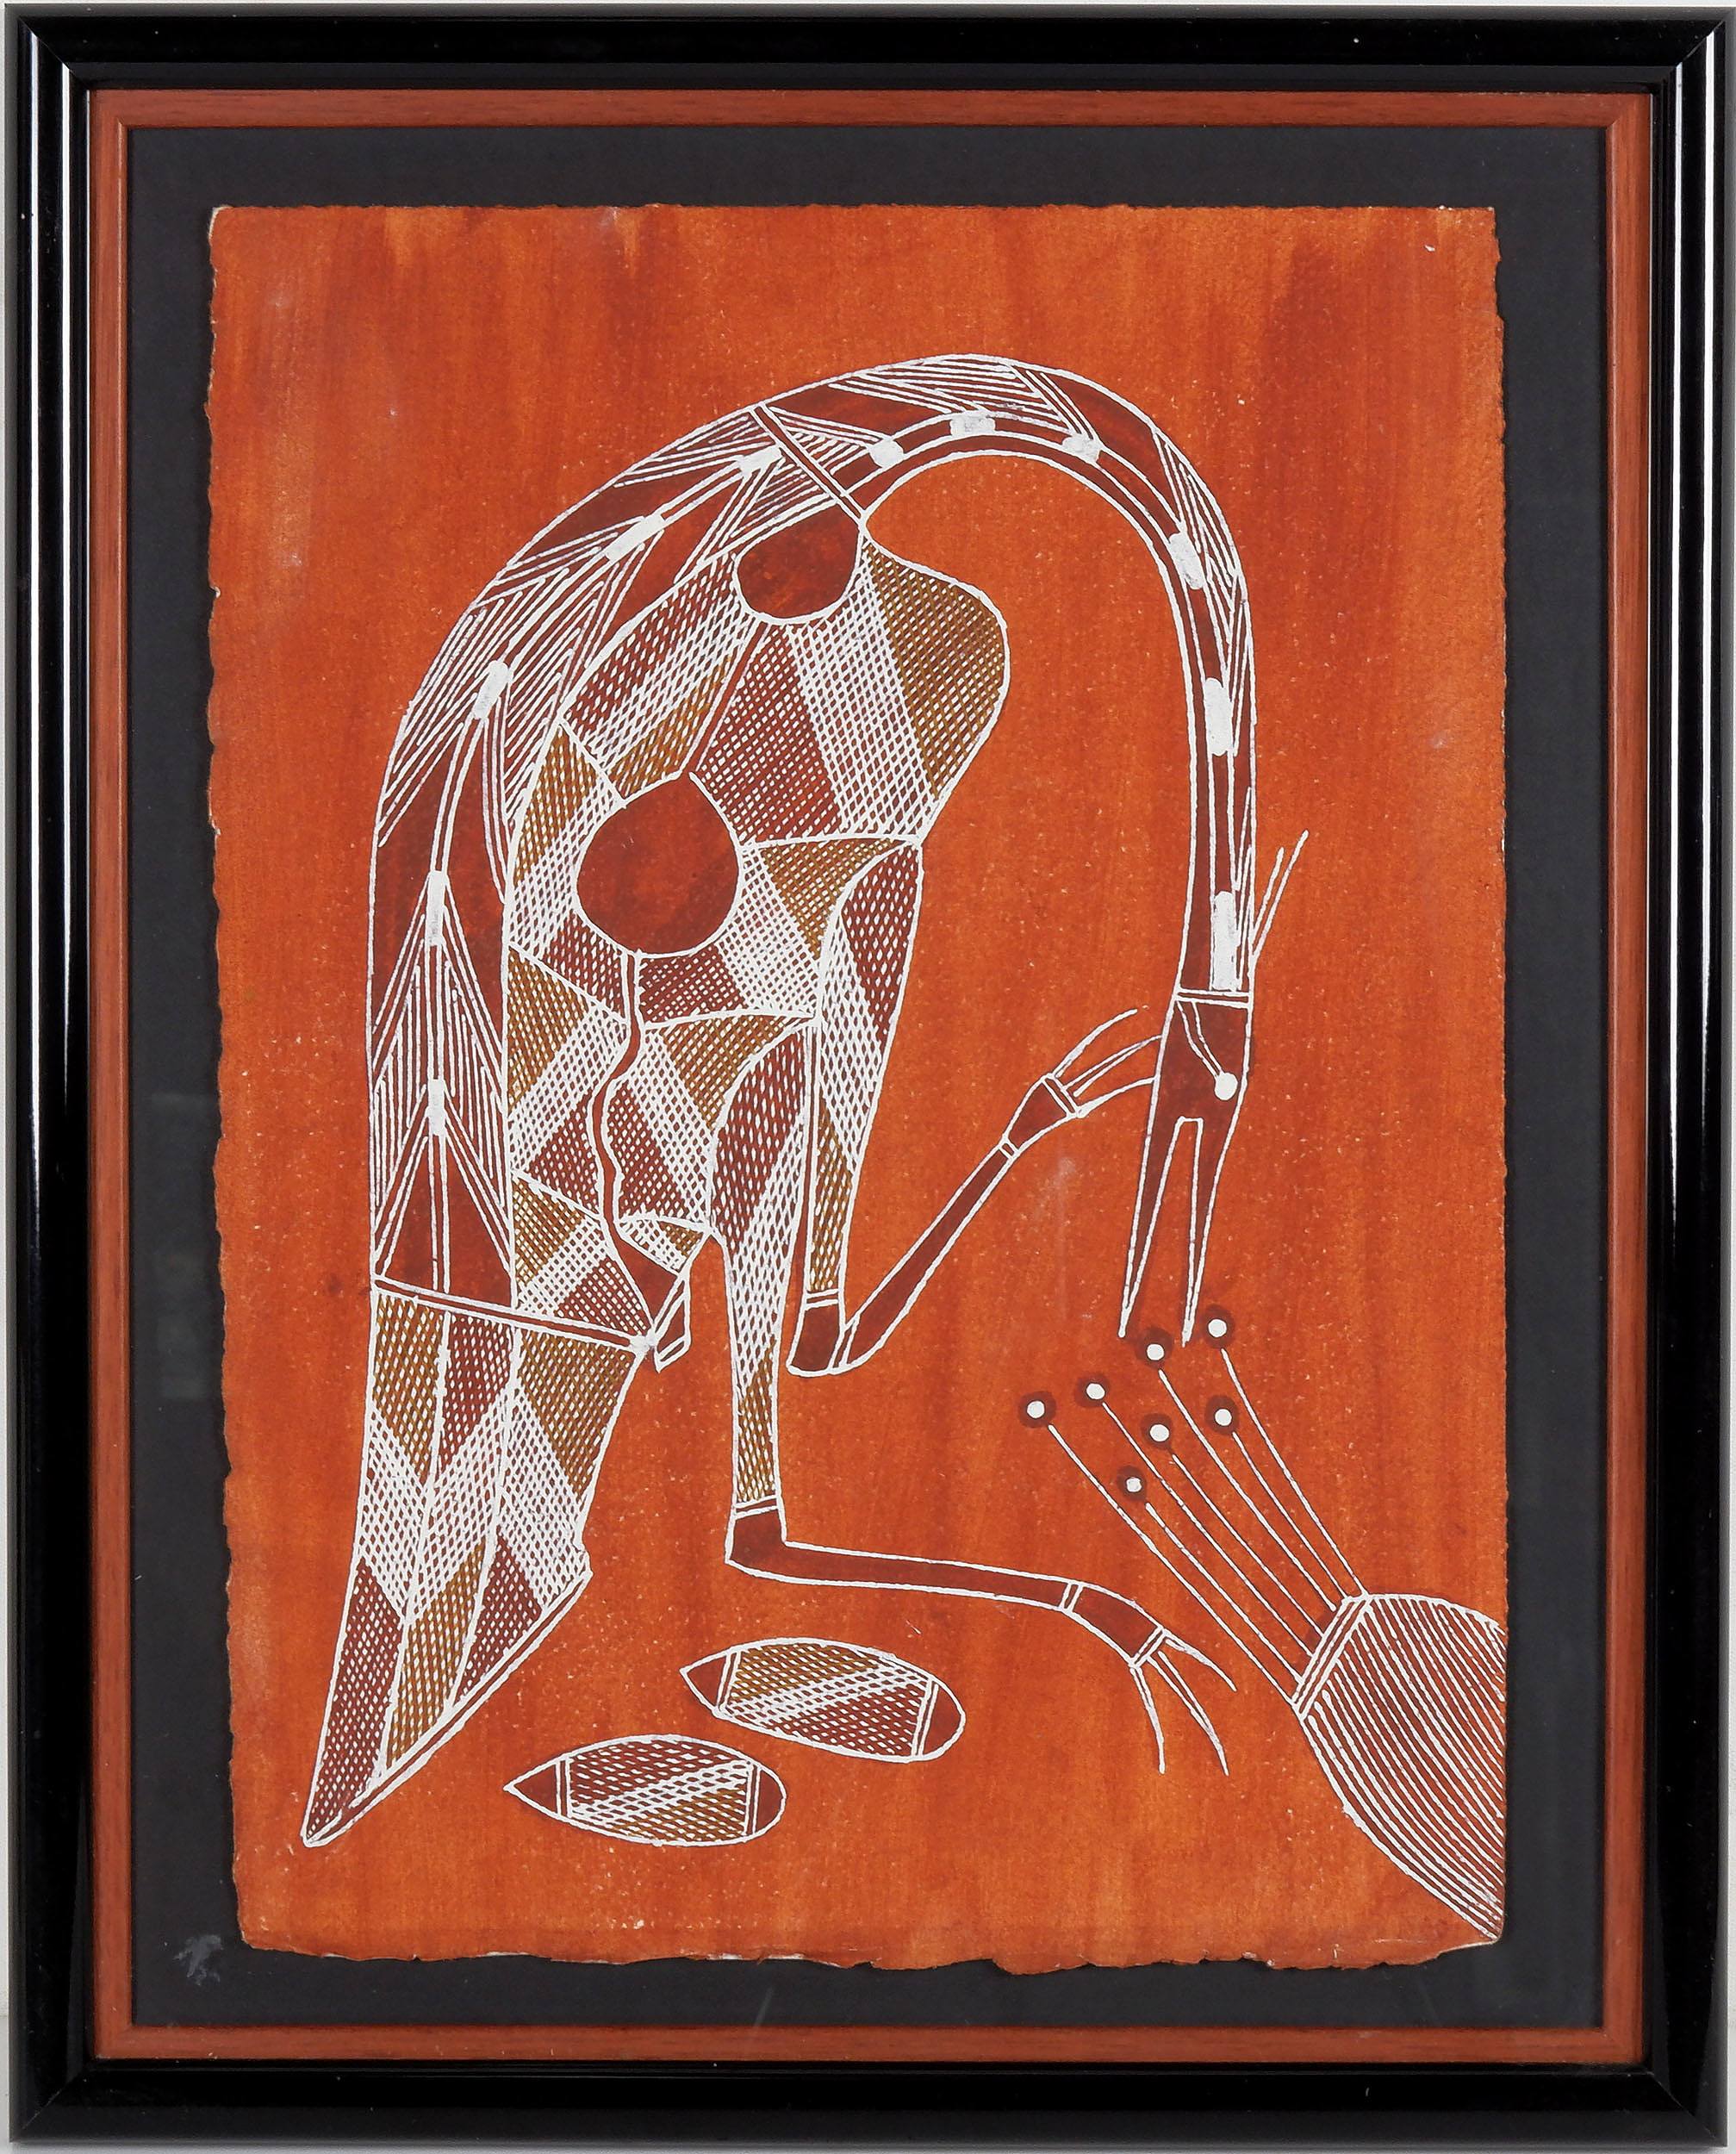 'Bruce Nabegeyo (c.1949-2009) Jabiru, Natural Earth Pigments on Paper'